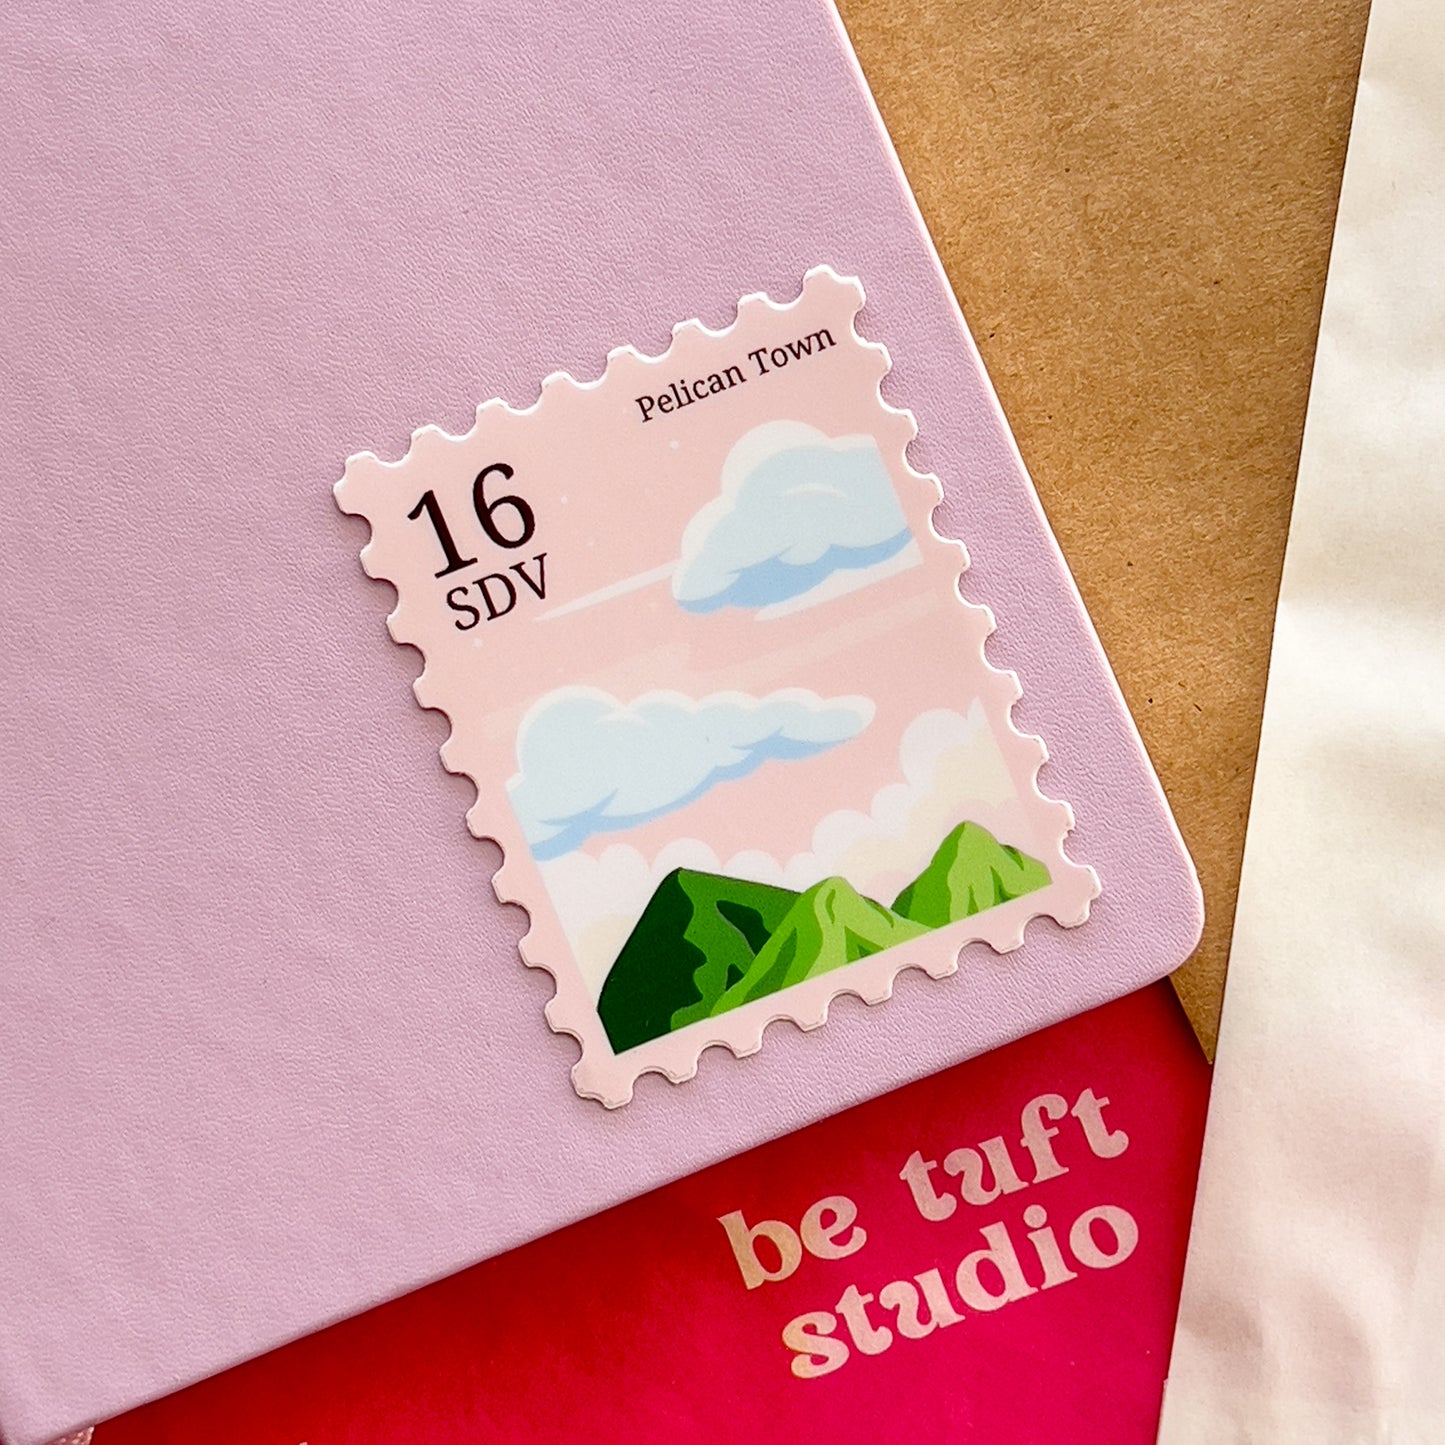 Pelican Town Pink Skies Stamp Sticker